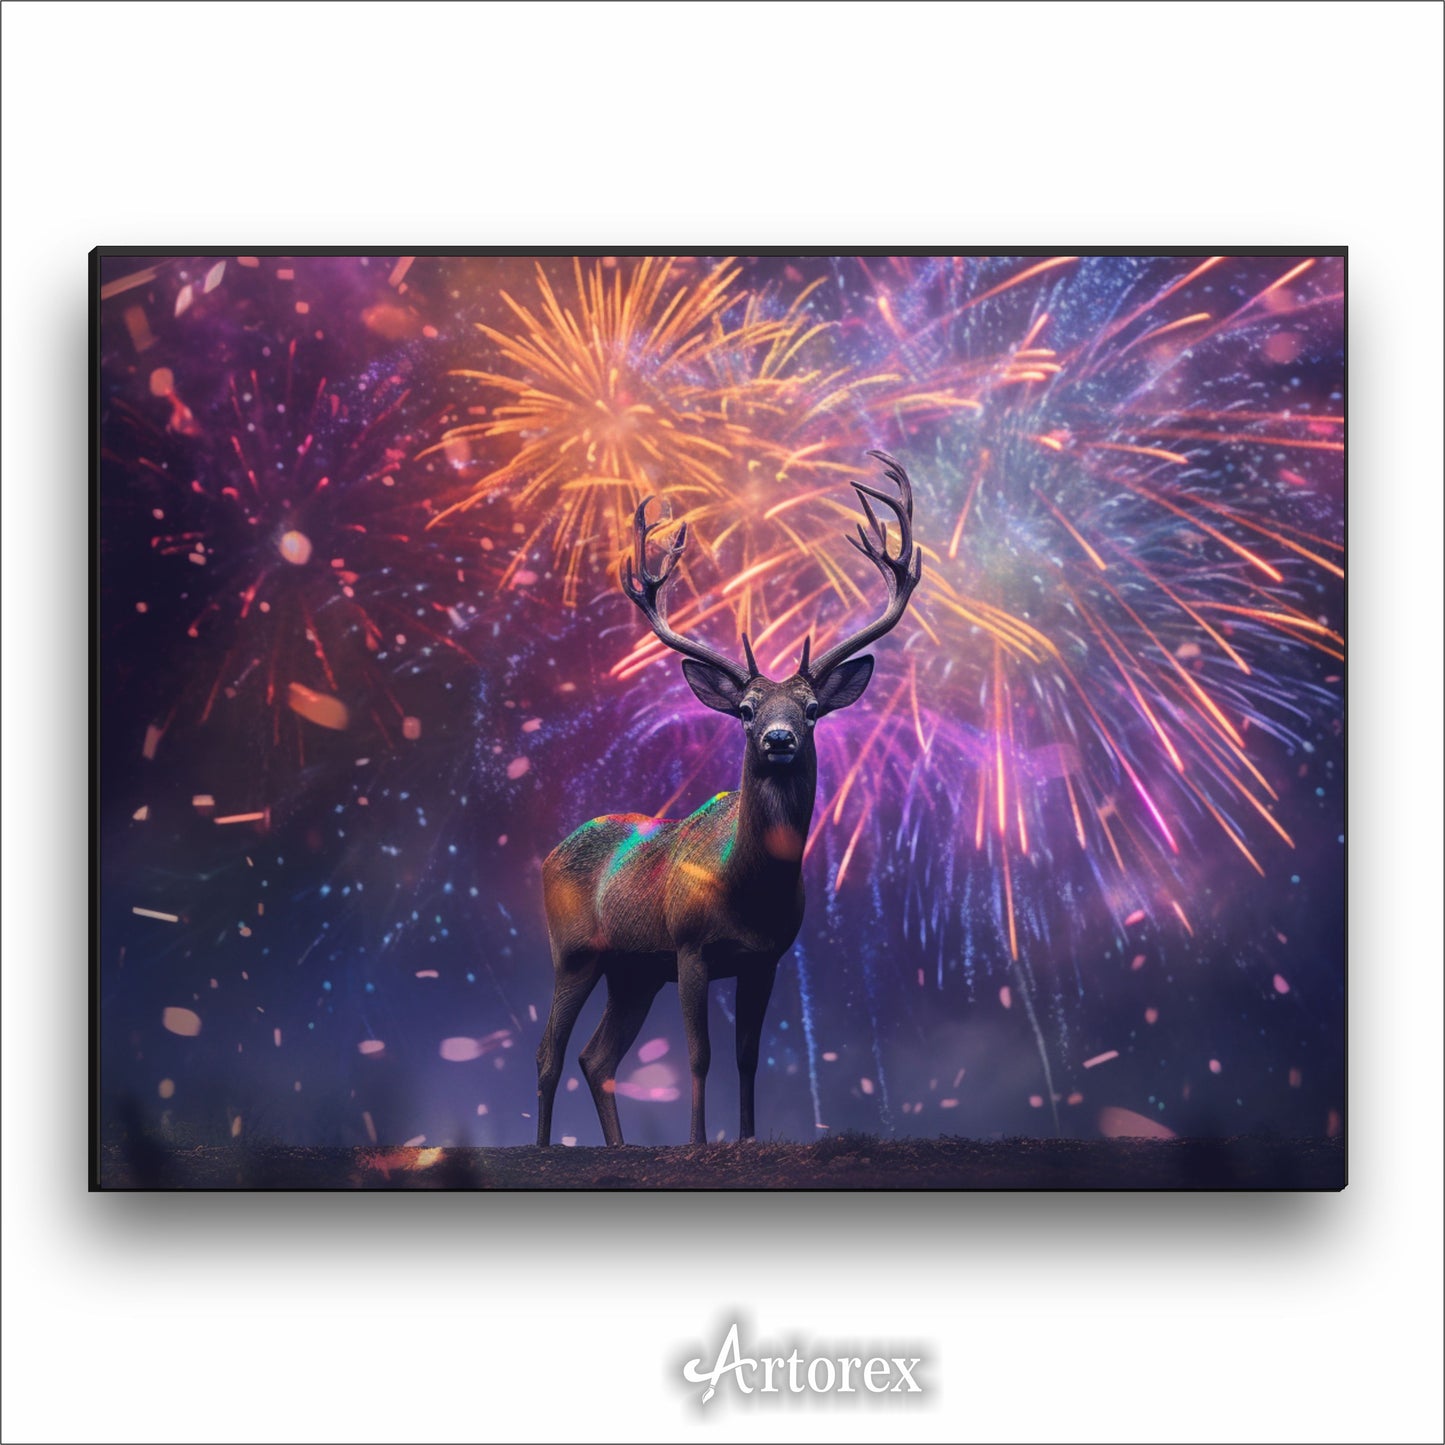 New Year's Deer Fiesta Fireworks Art